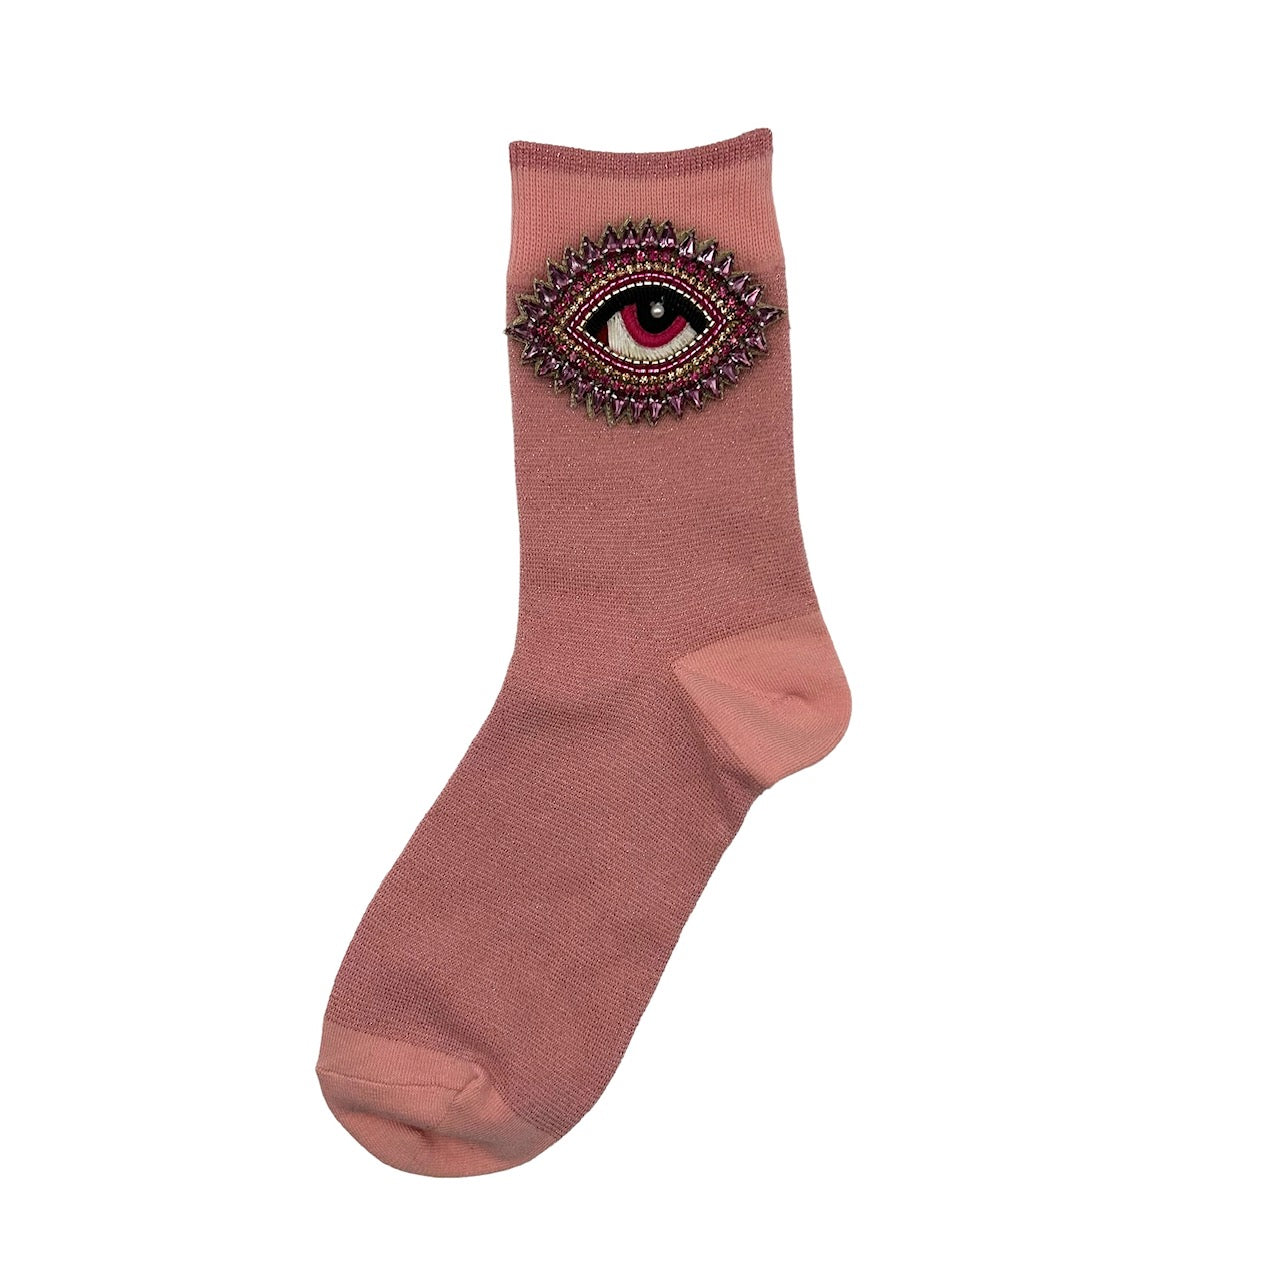 Tokyo socks in pale pink with a rose eye brooch